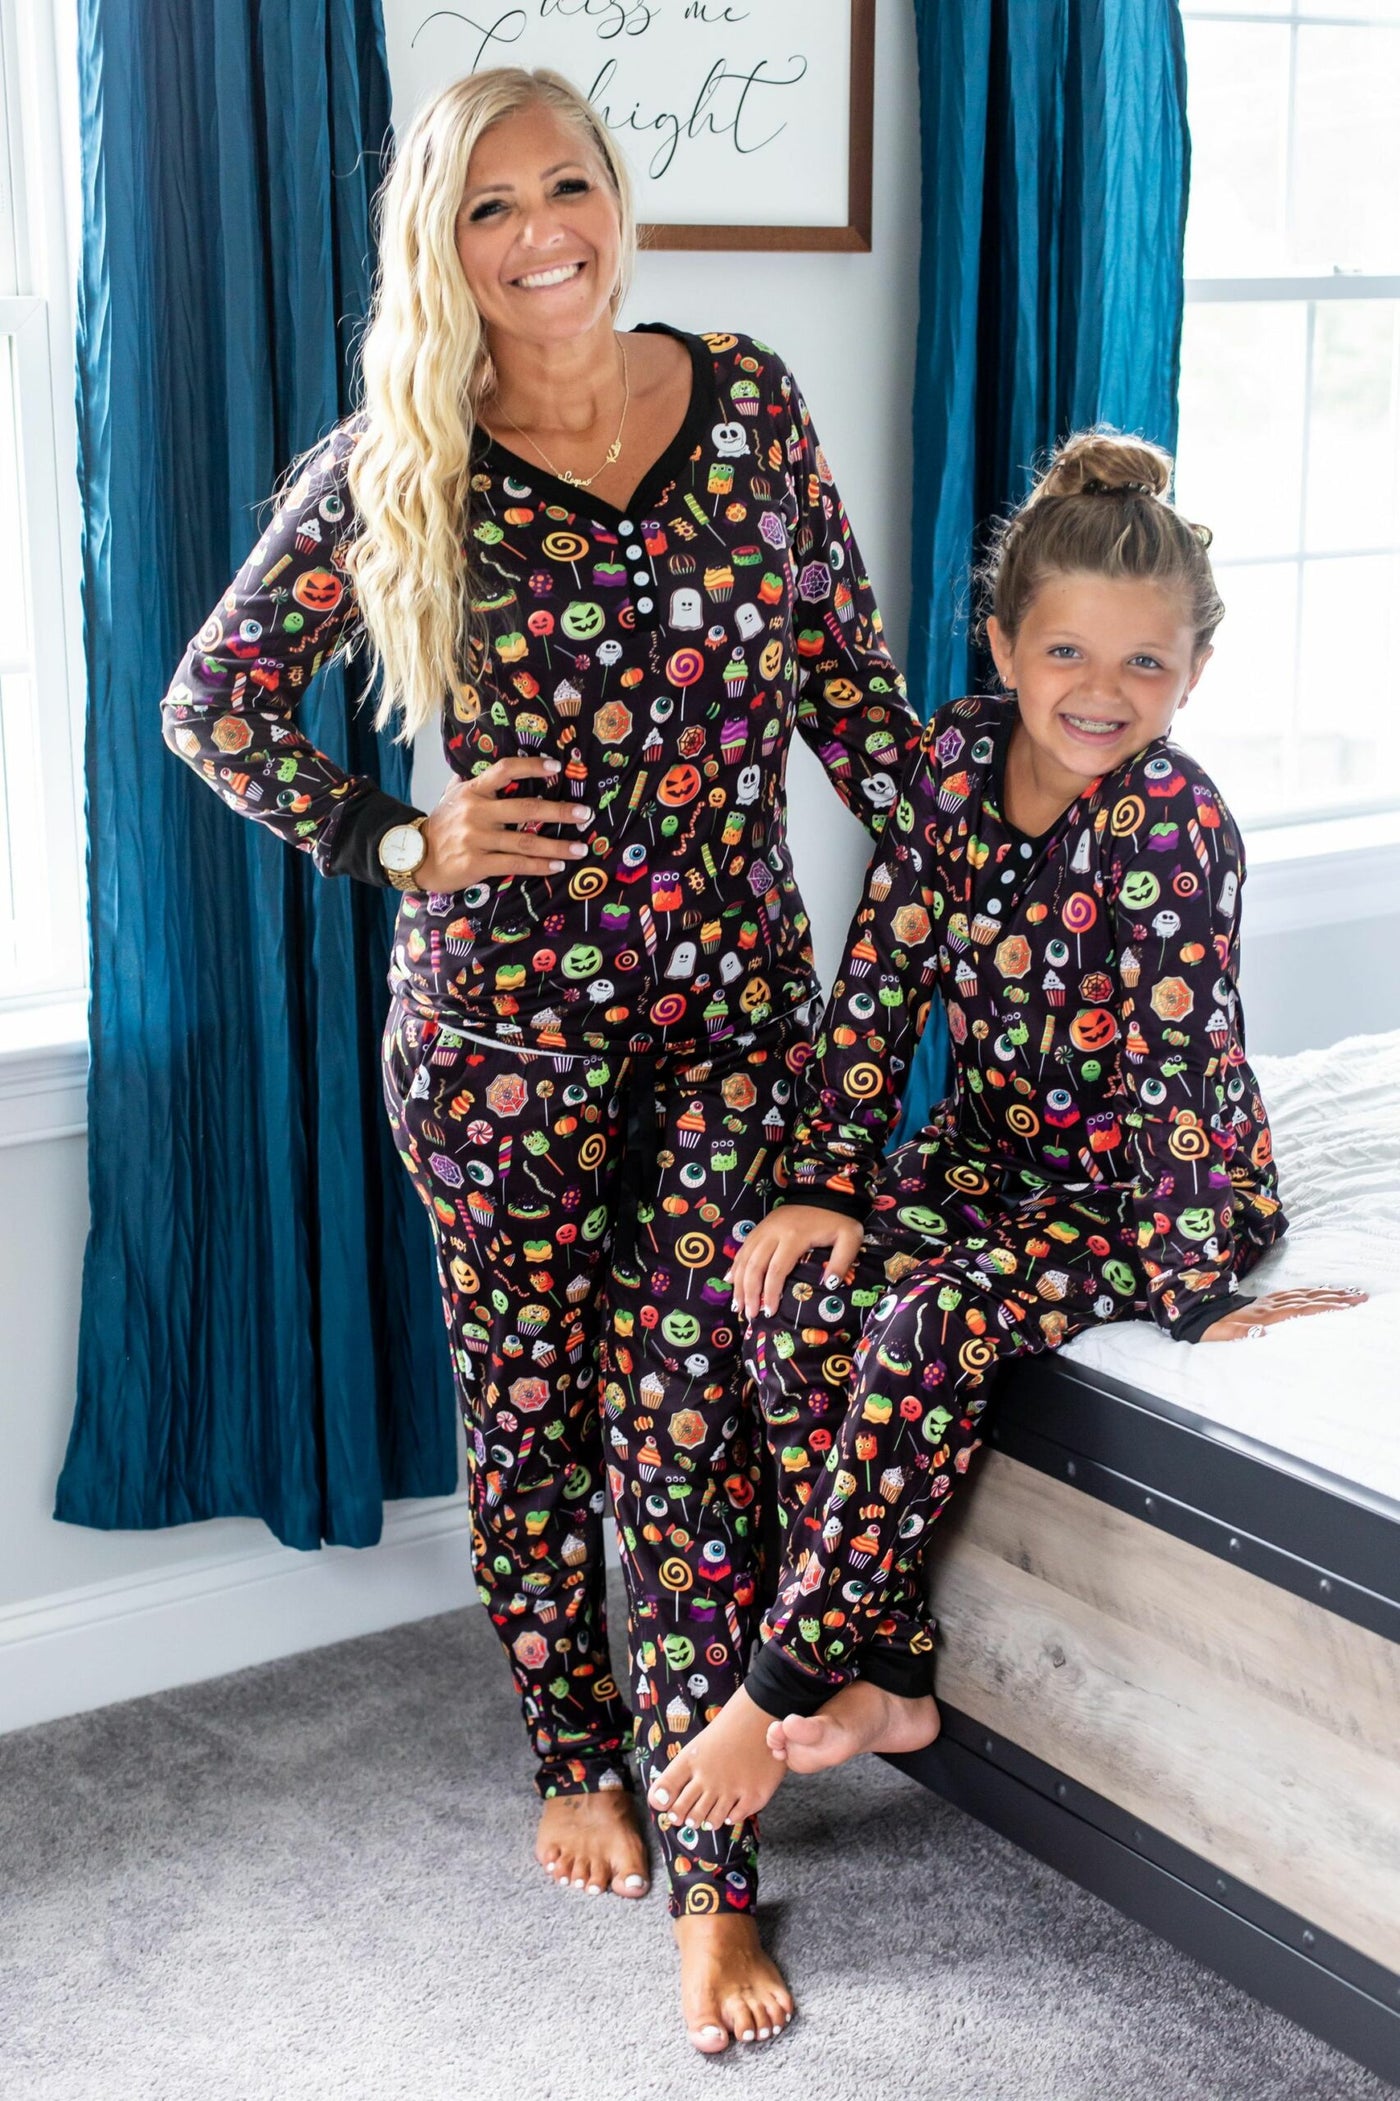 PREORDER: Matching Halloween Pajama Candy